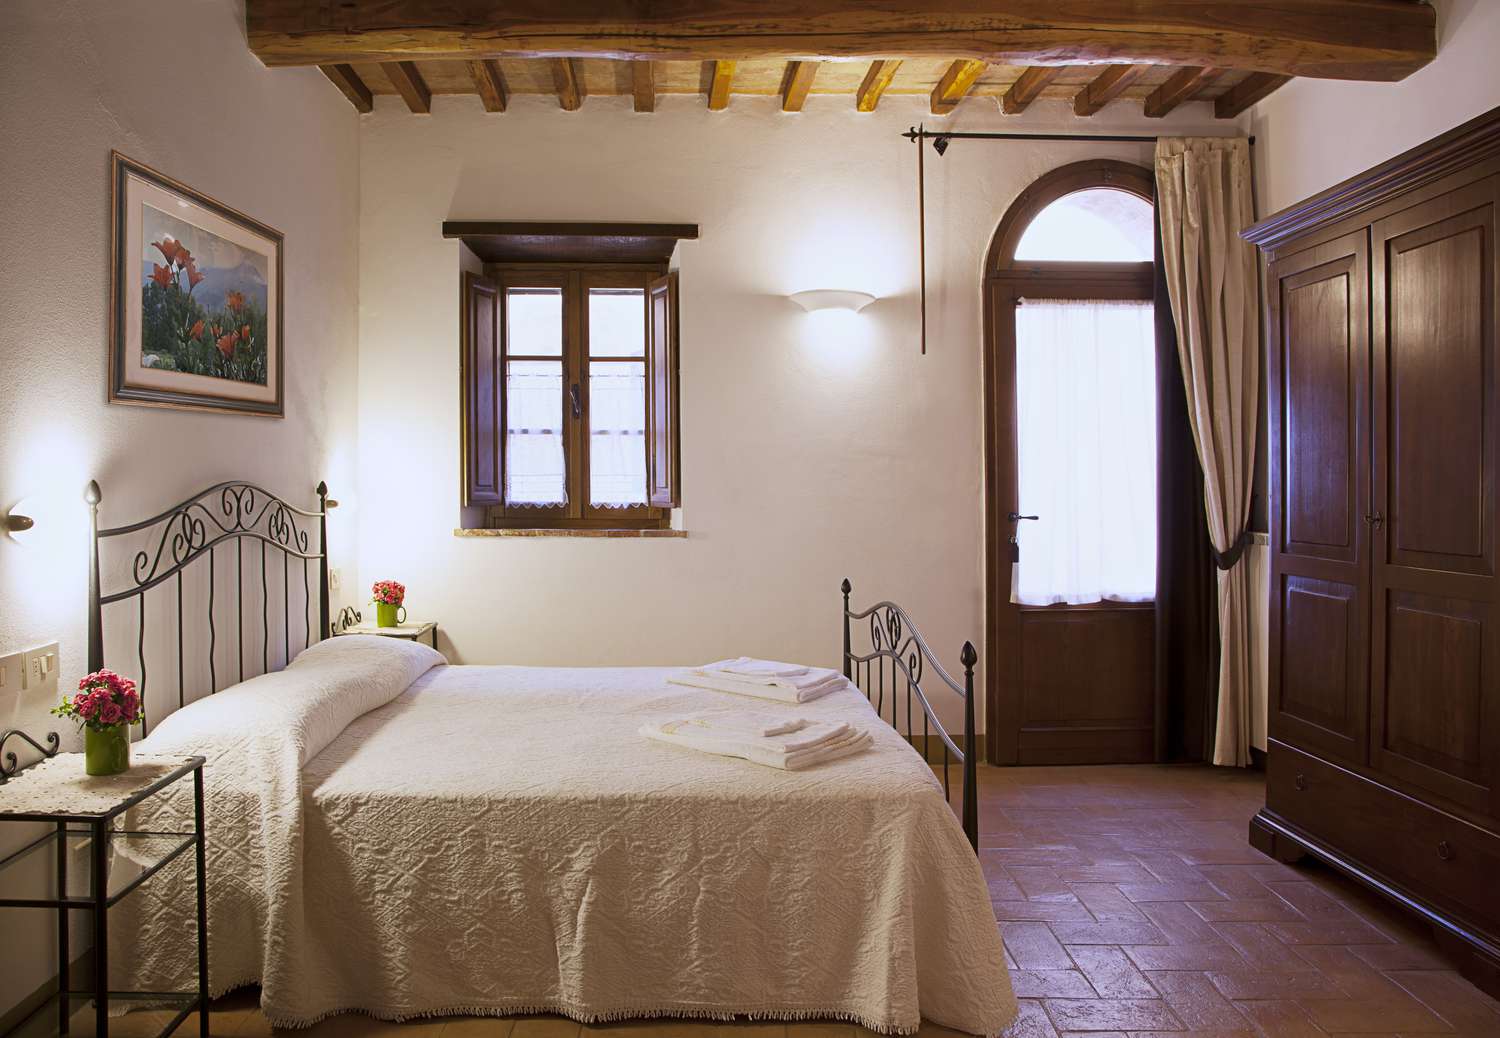 Interior shot of Tuscan bedroom